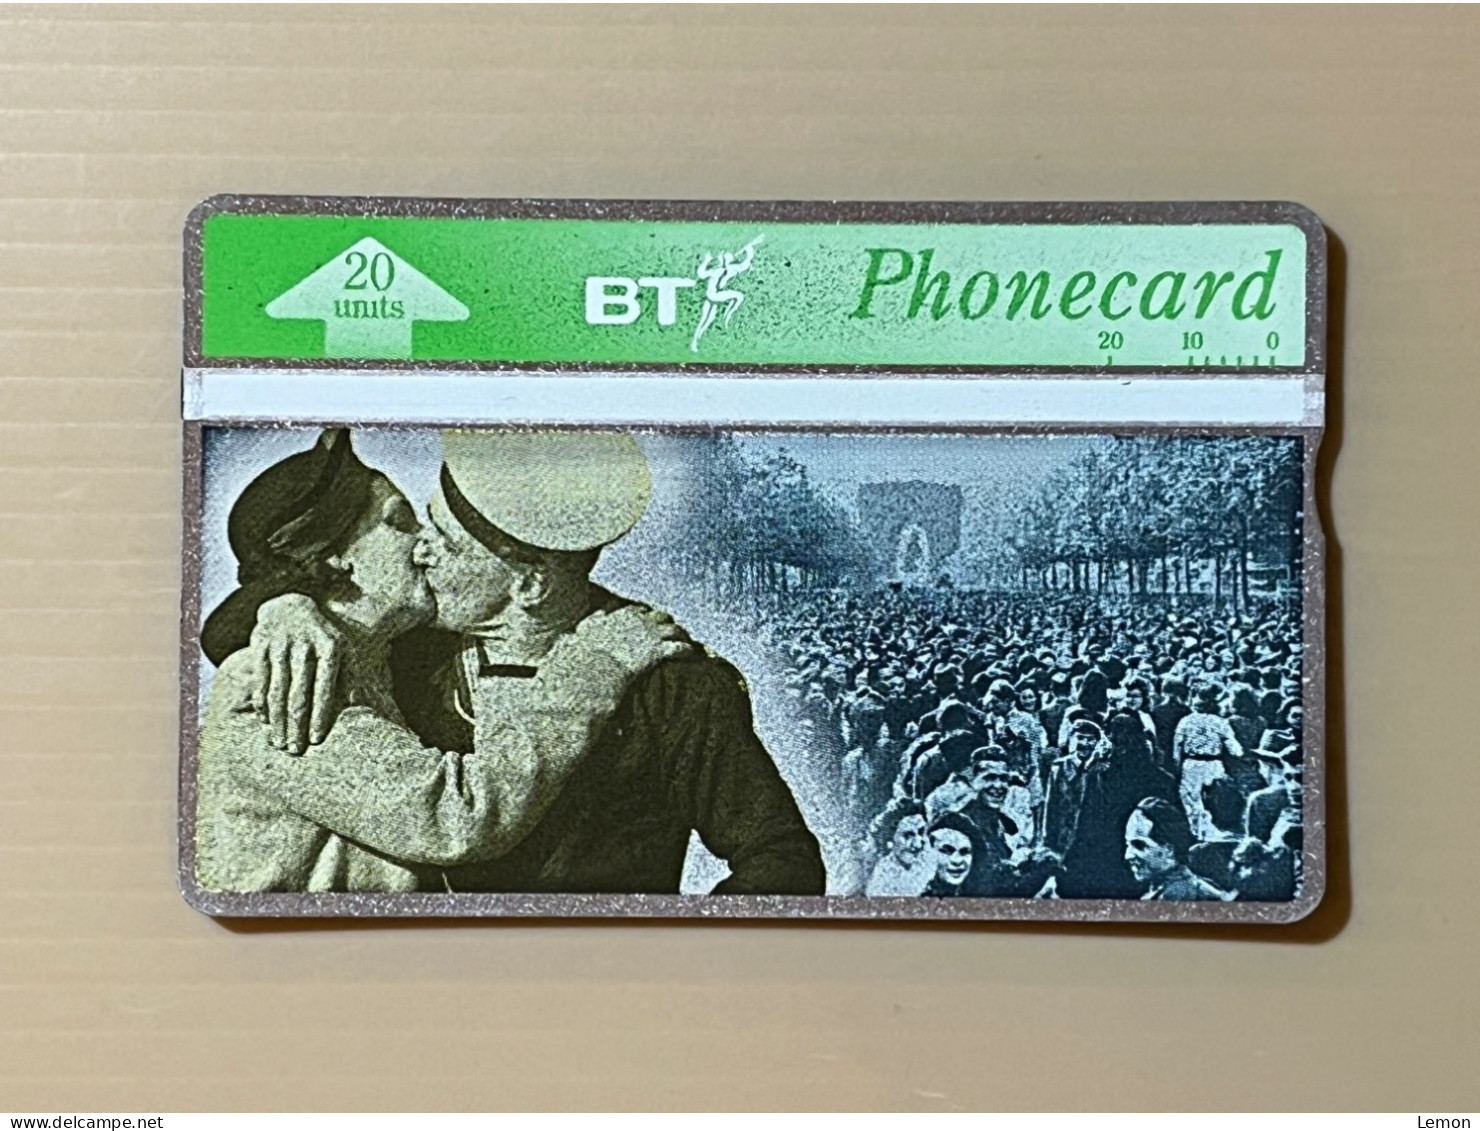 Mint UK United Kingdom - British Telecom Phonecard - BT 20 Units The Time Of Our Lives Couple Kissin- Set Of 1 Mint Card - Sammlungen